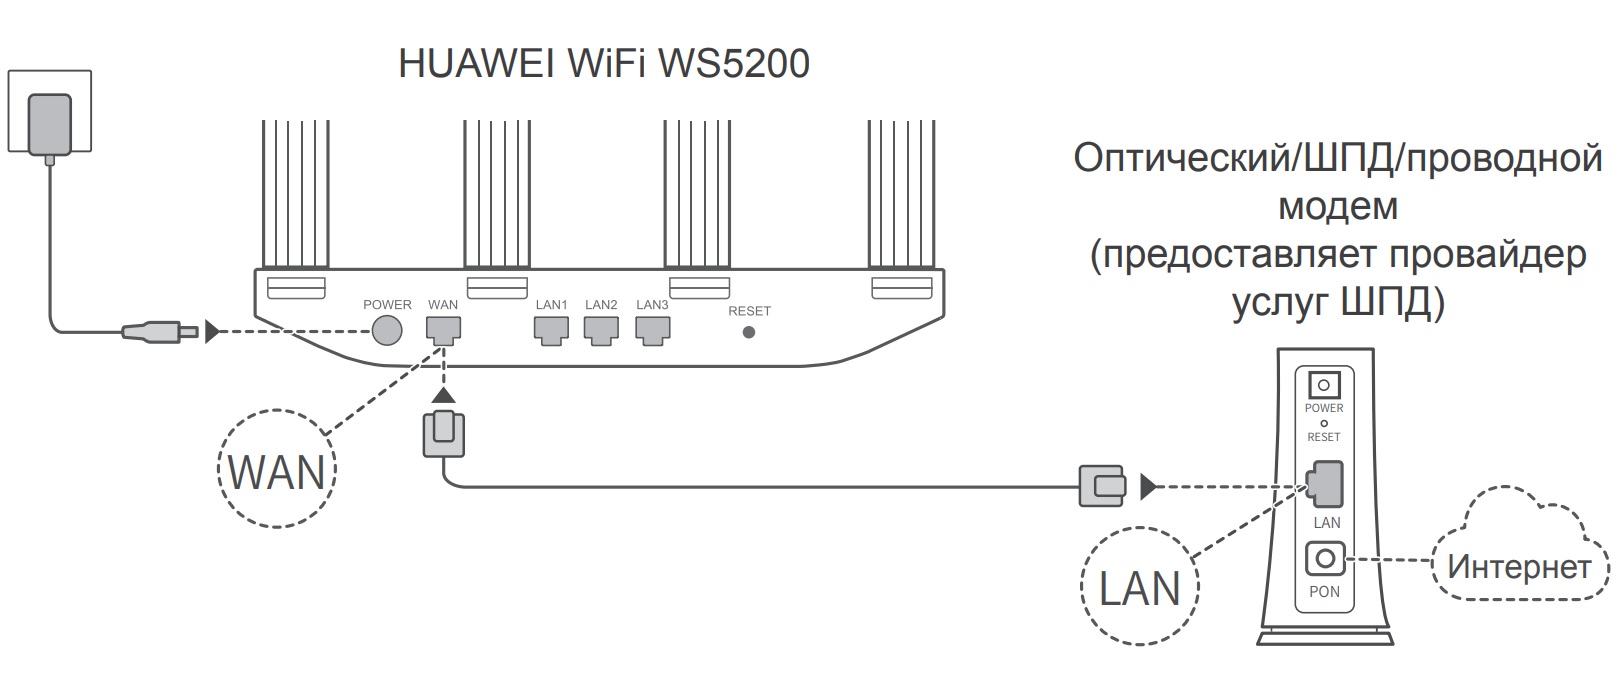 Как подключить роутер хуавей. Huawei WIFI ws5200. Wi-Fi роутер Huawei ax2 ws7001. Wi-Fi роутер Huawei ws5200 v3. Схема подключения роутер Huawei.